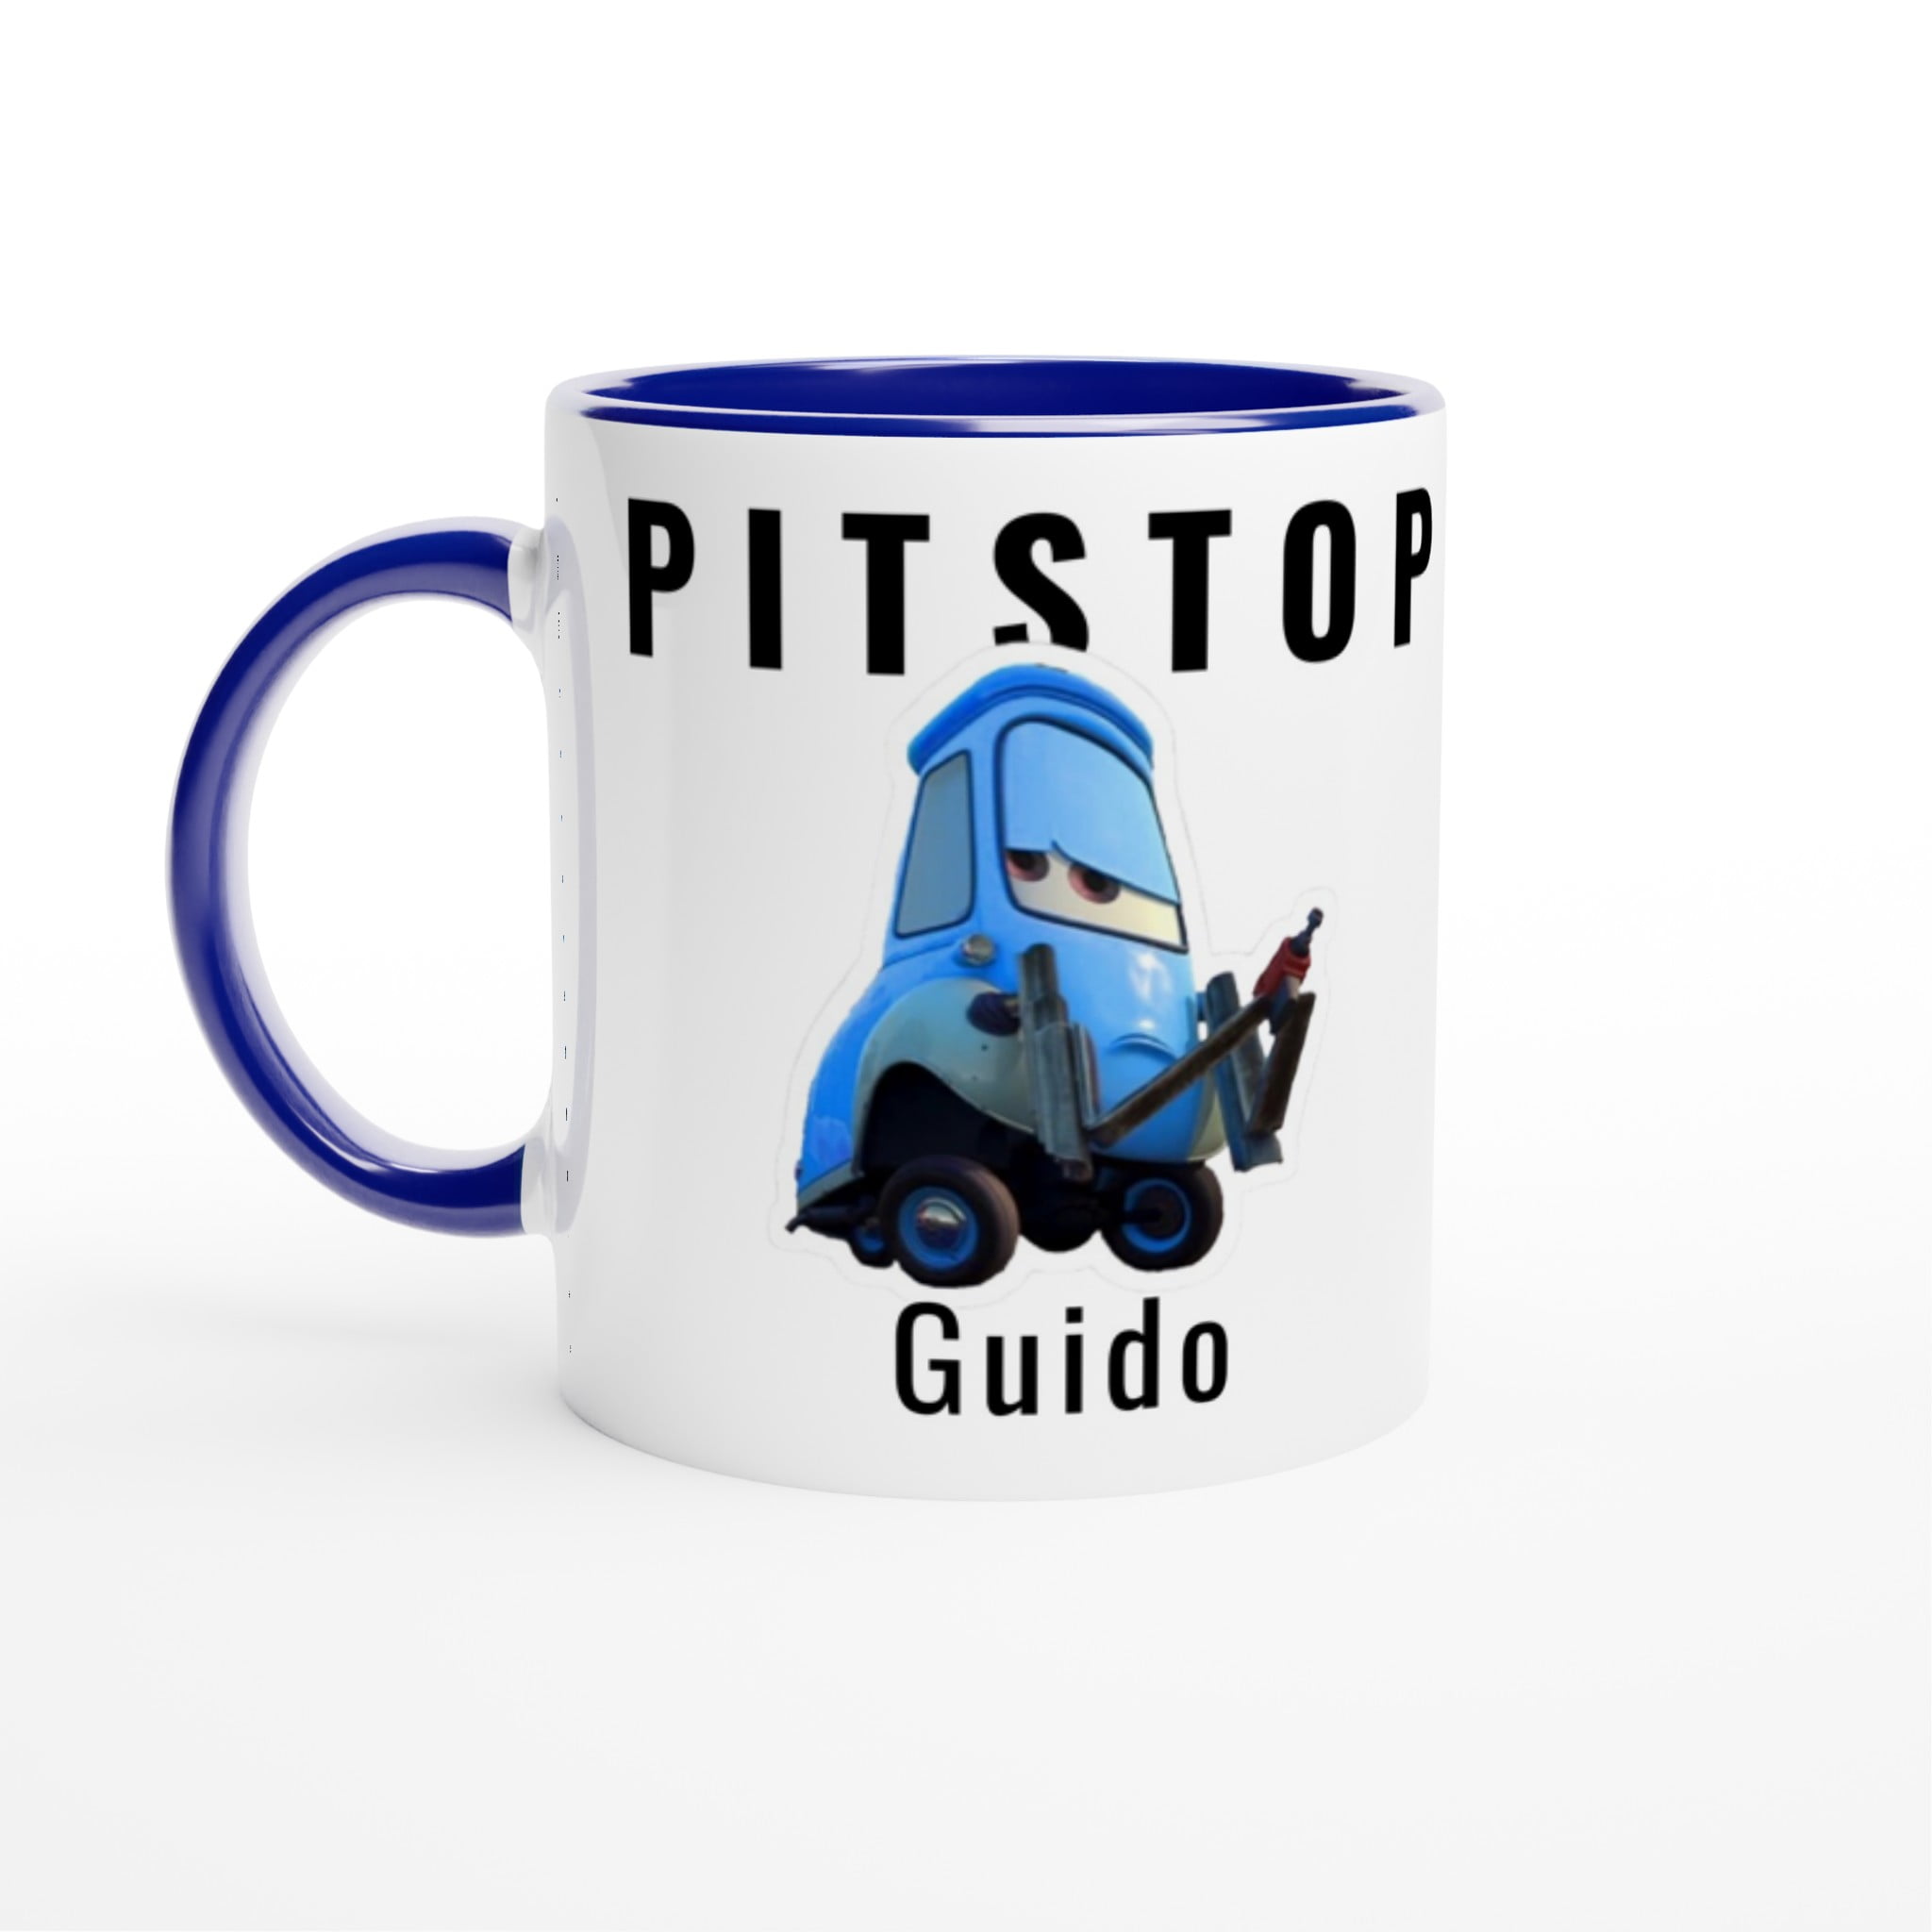 Pitstop Guido Mug